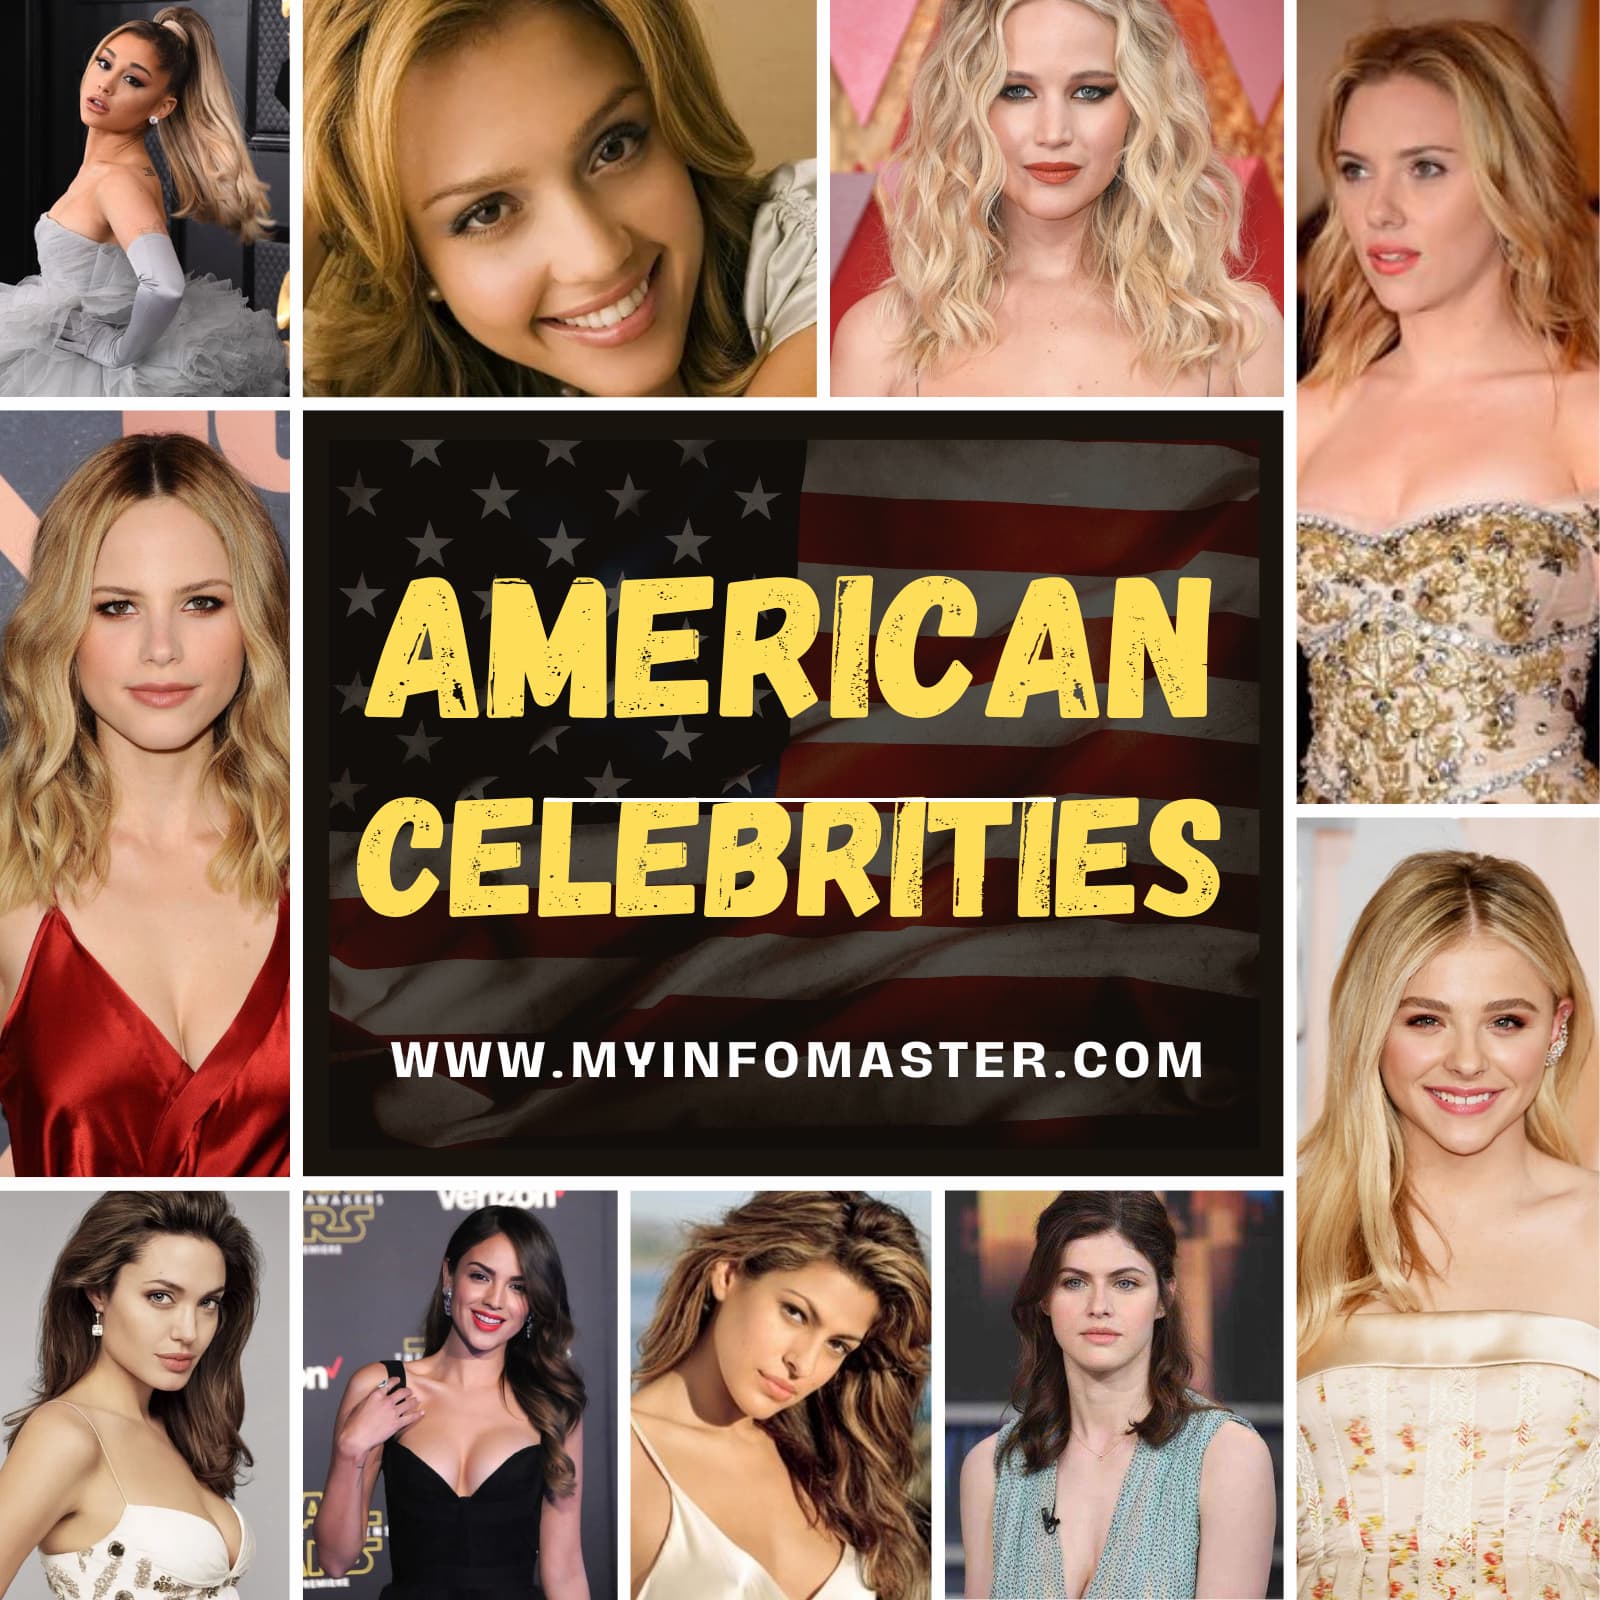 American Celebrities, Famous American Celebrities, American star, American female celebrities, American actresses, Richest American Celebrities